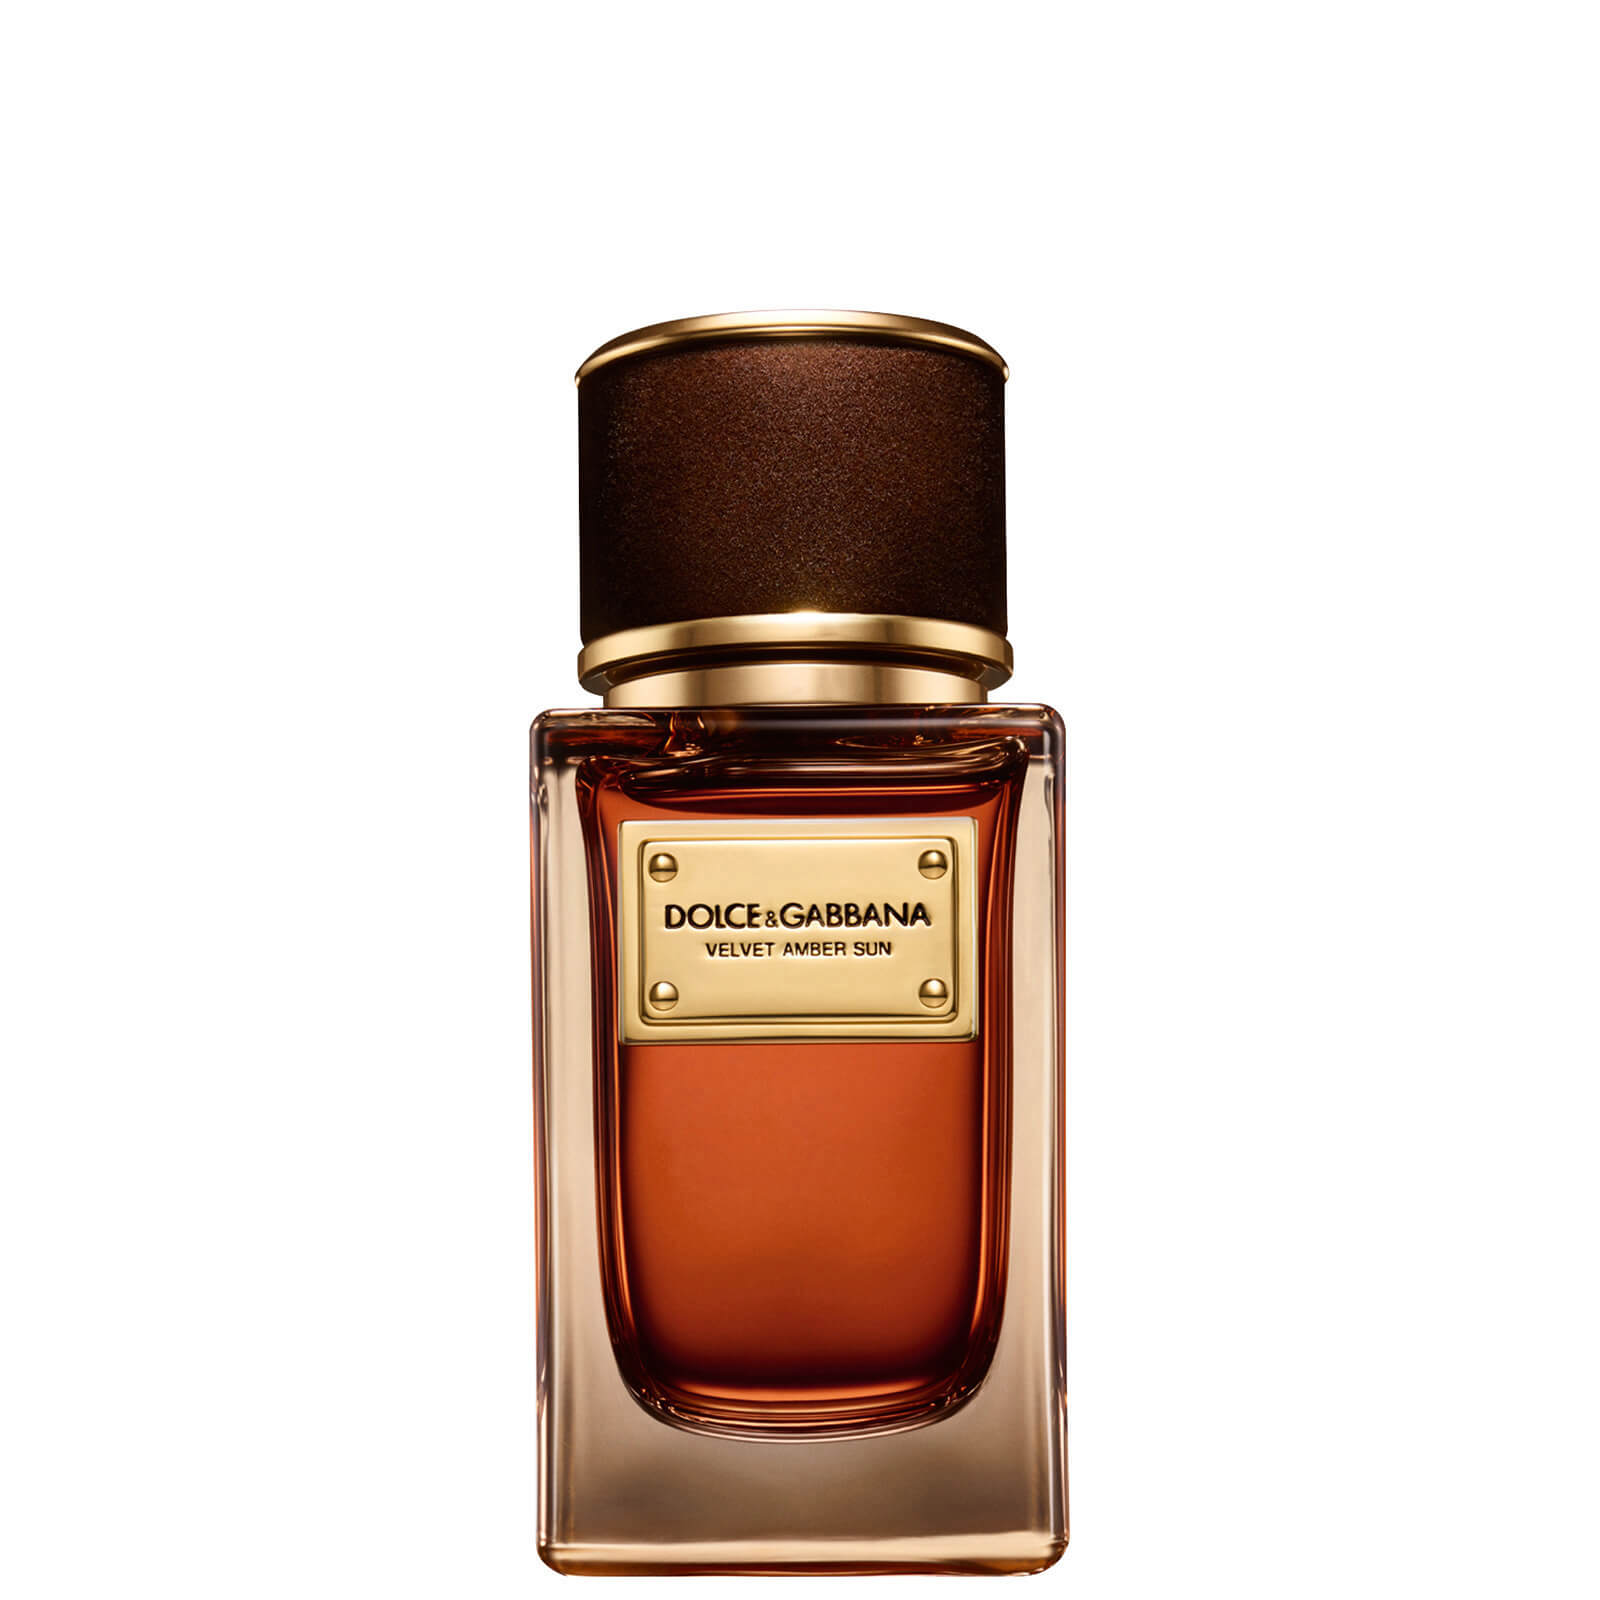 Dolce&Gabbana Velvet Amber Sun Eau de Parfum (Various Sizes) - 50ML